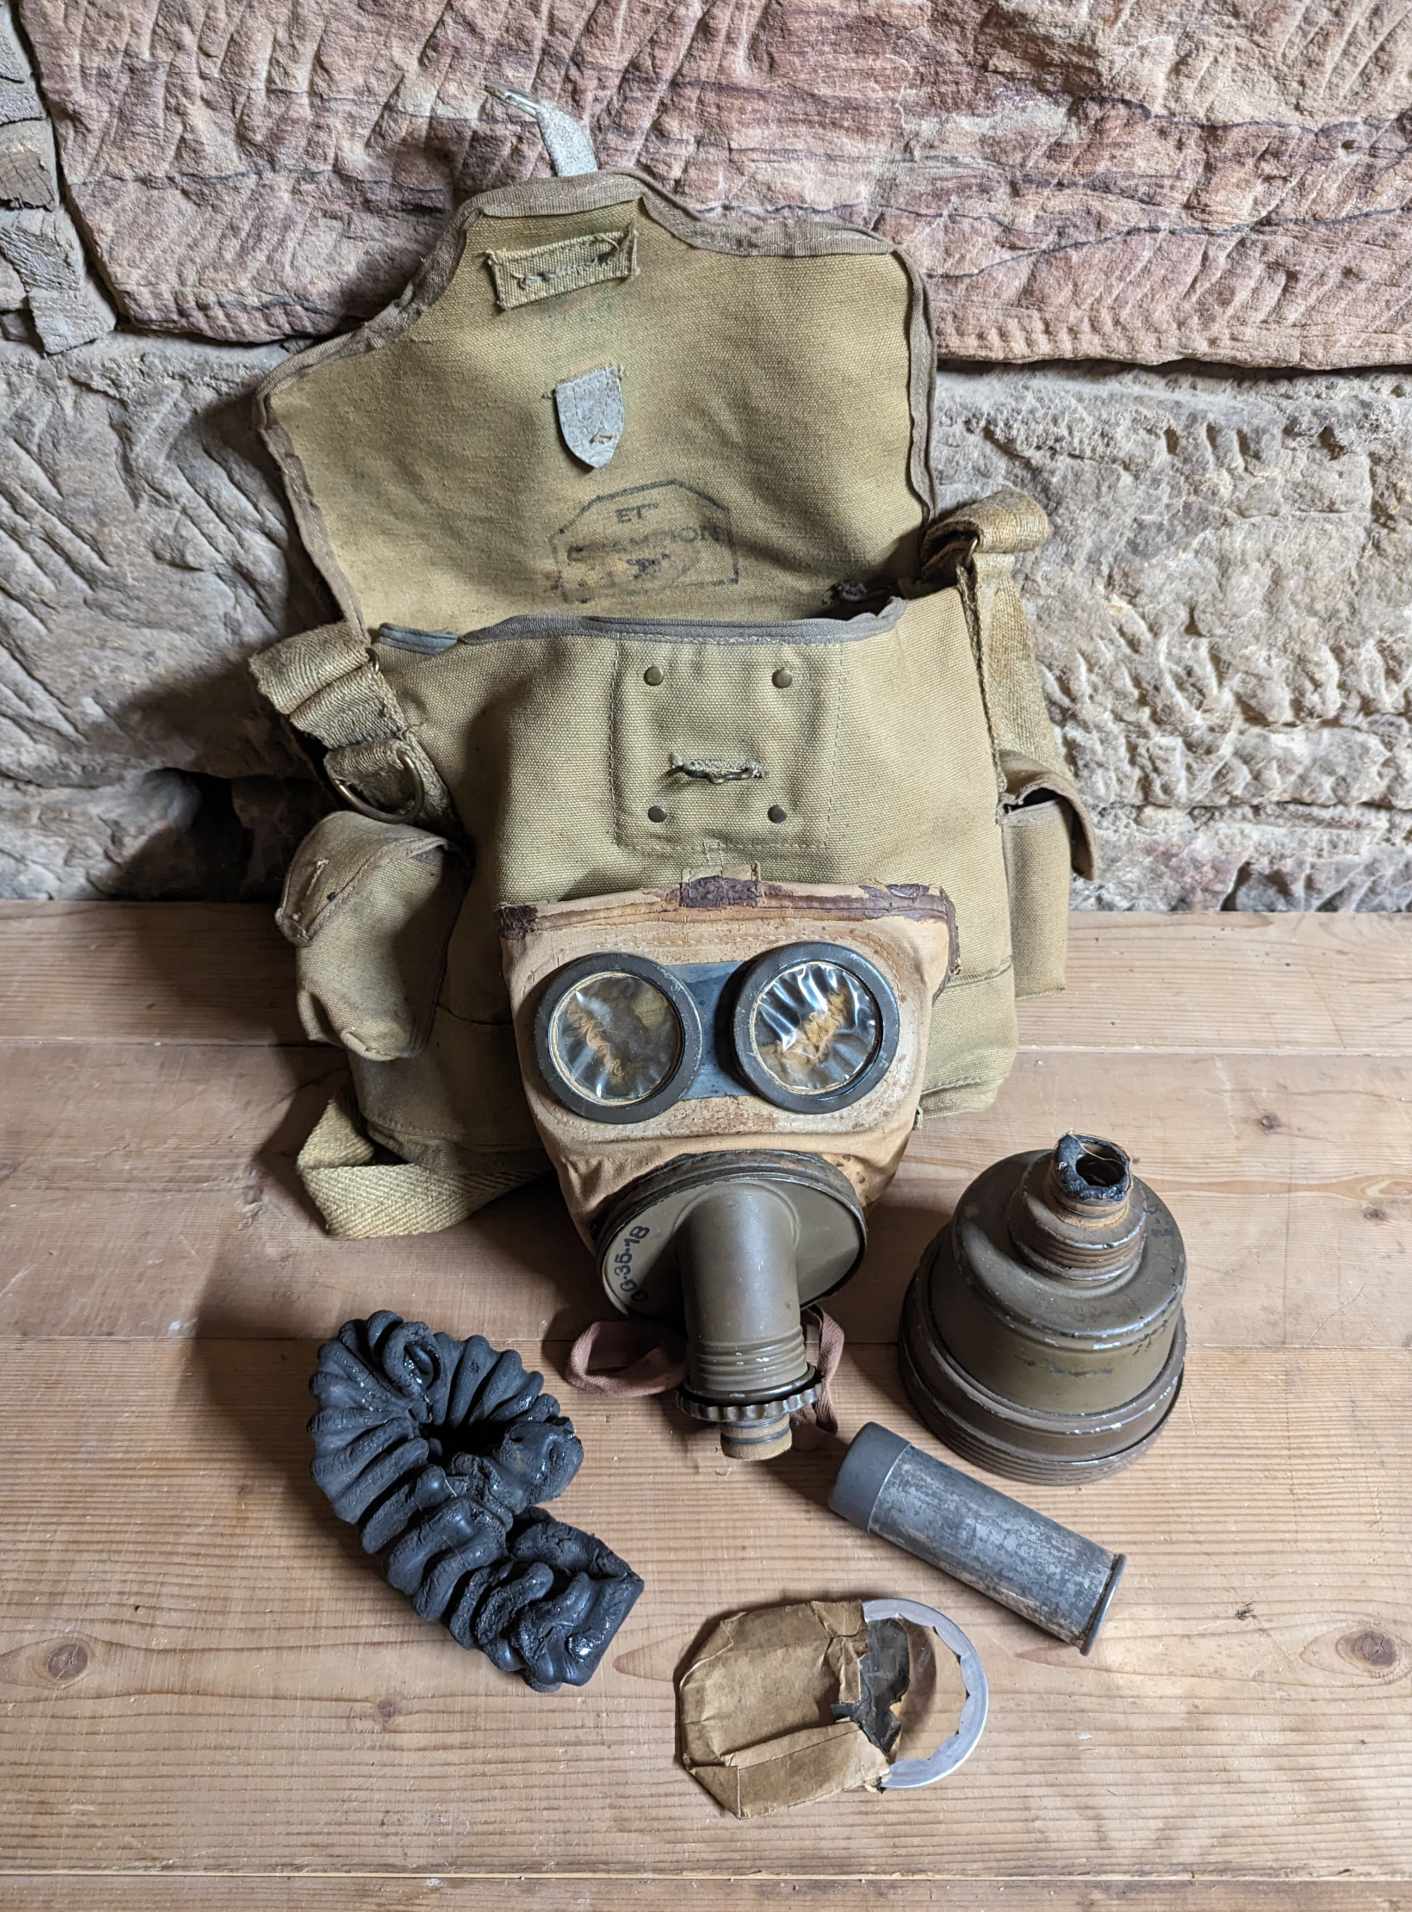 militaria : Masque à gaz ANP 31 France 40 / French ww2 gaz mask